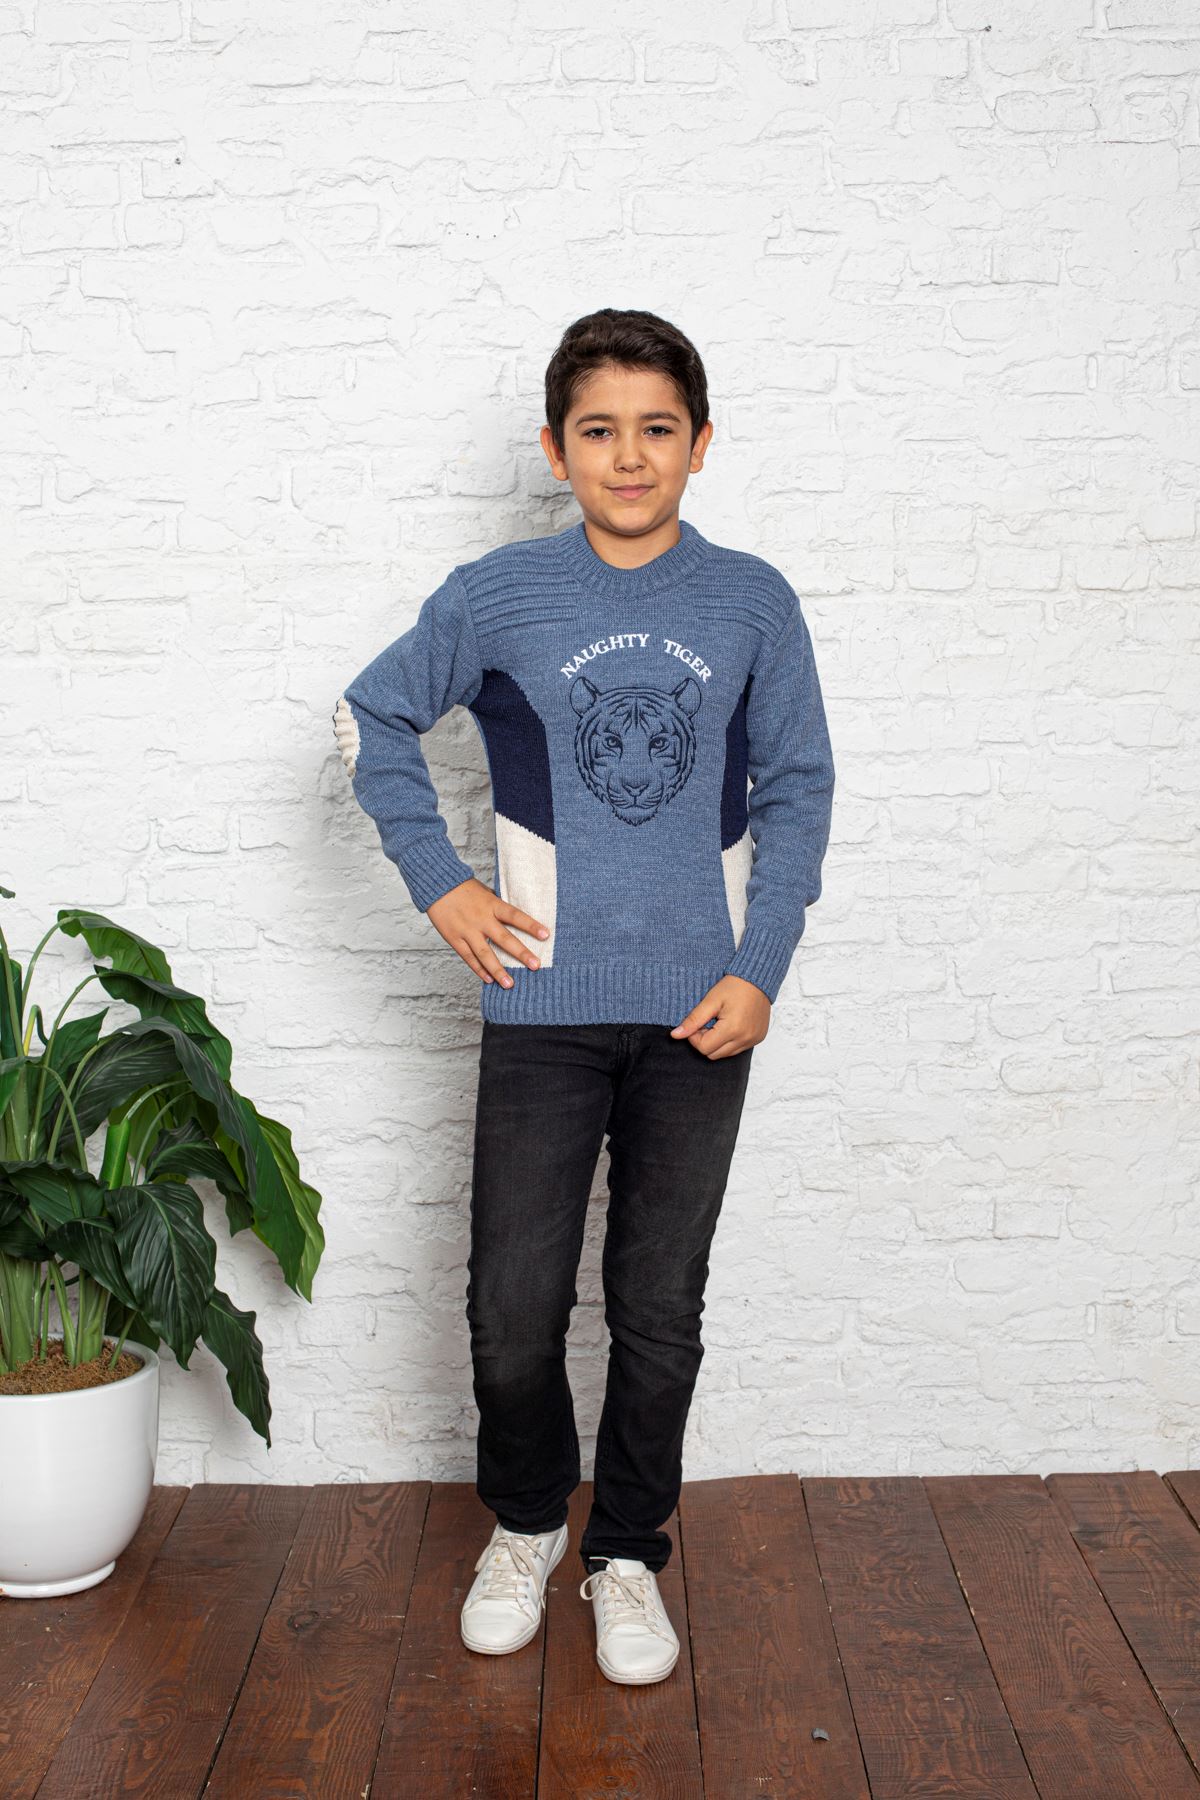 Lion Printed Crew-Neck Boy's Knit Sweater